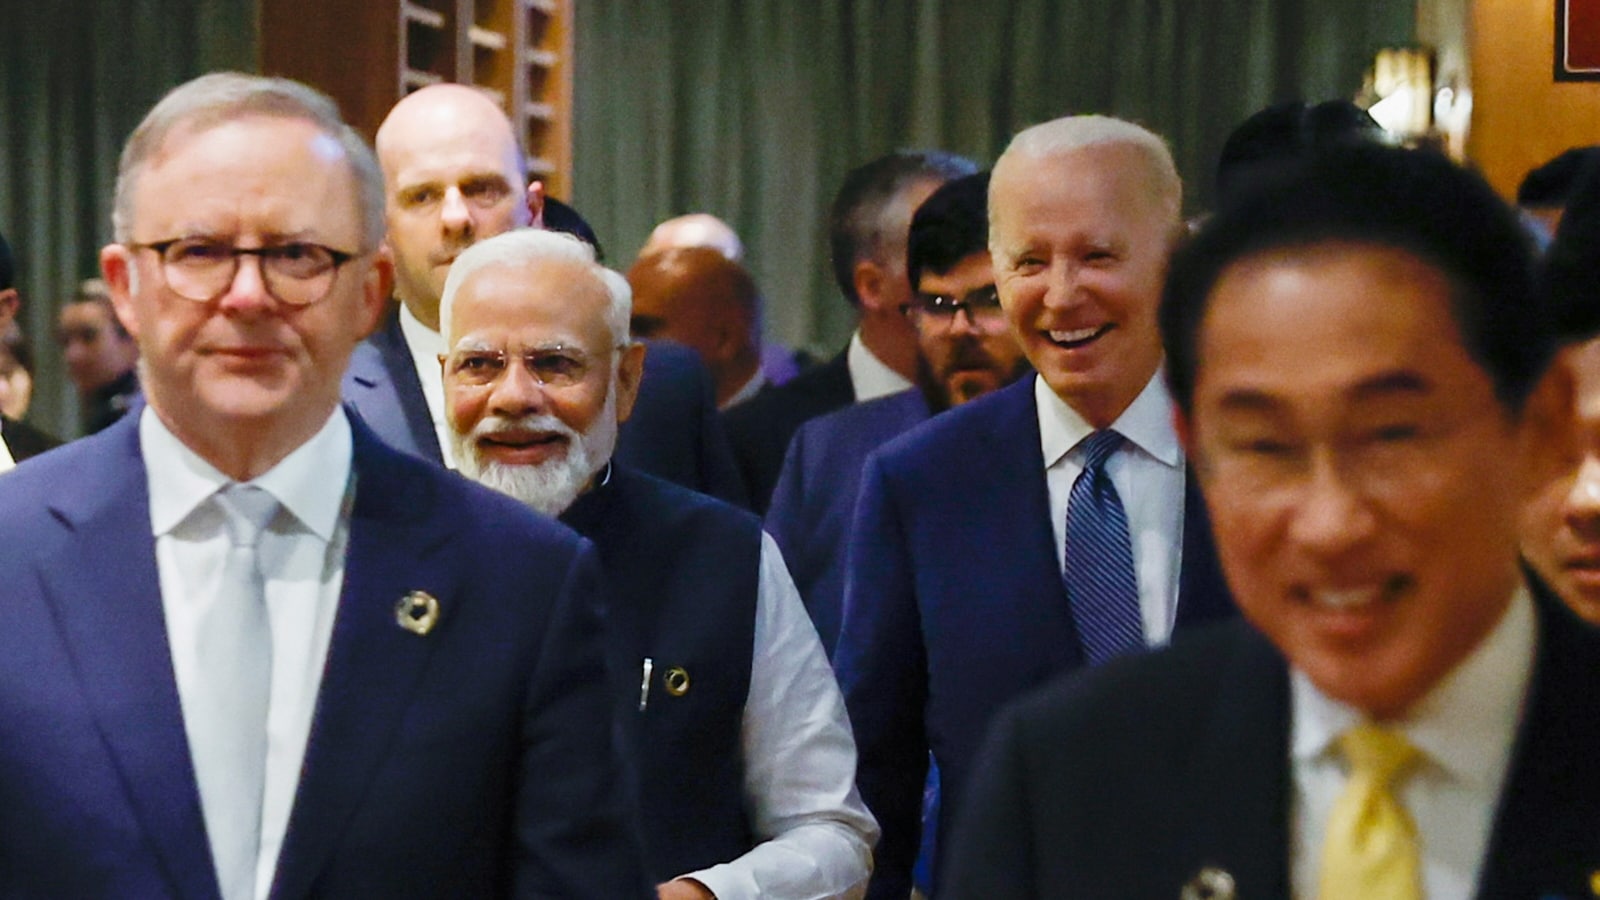 PM Modi thanks Japan’s Kishida for G7 invite as first leg of 3-nation tour ends | Latest News India